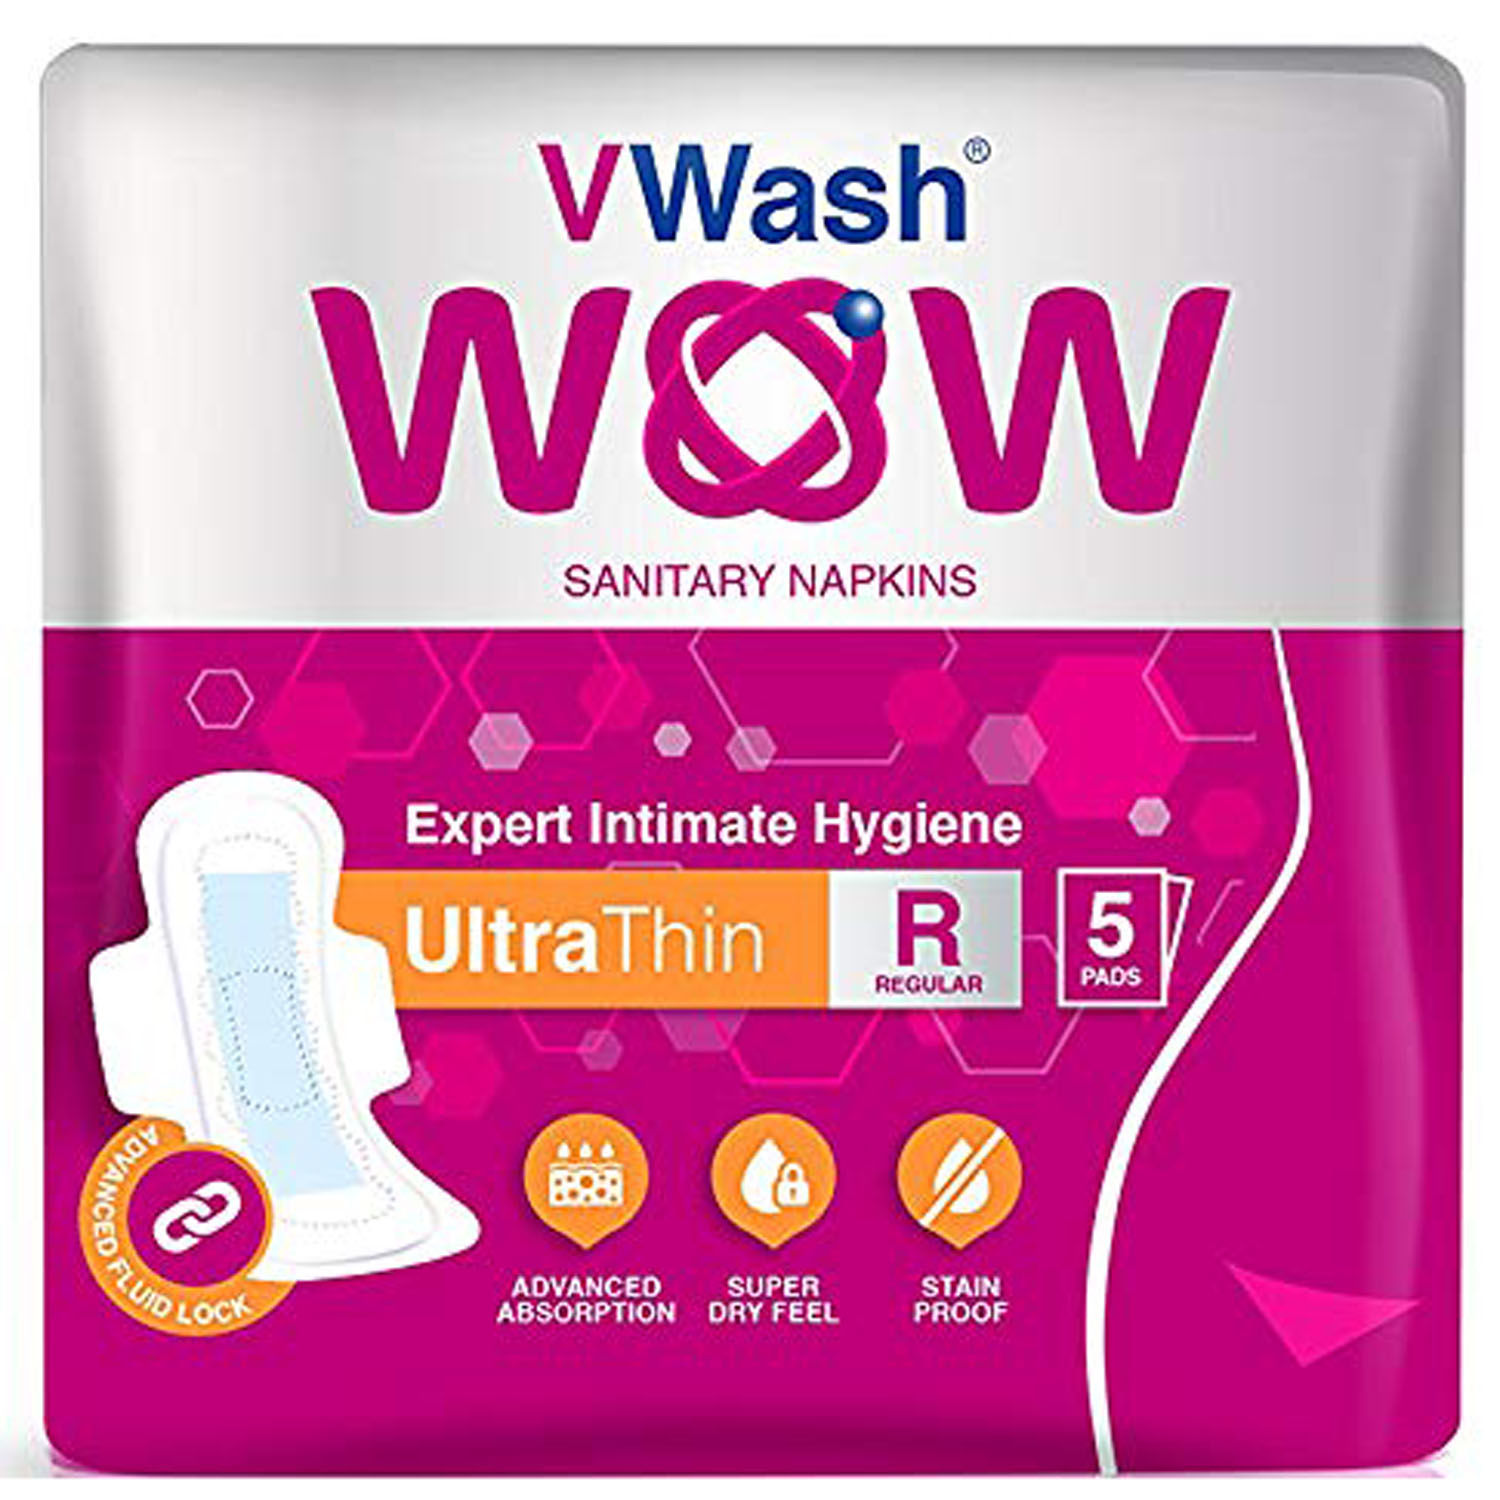 Buy VWash Wow Ultra Thin Sanitary Napkins Regular, 5 Count Online